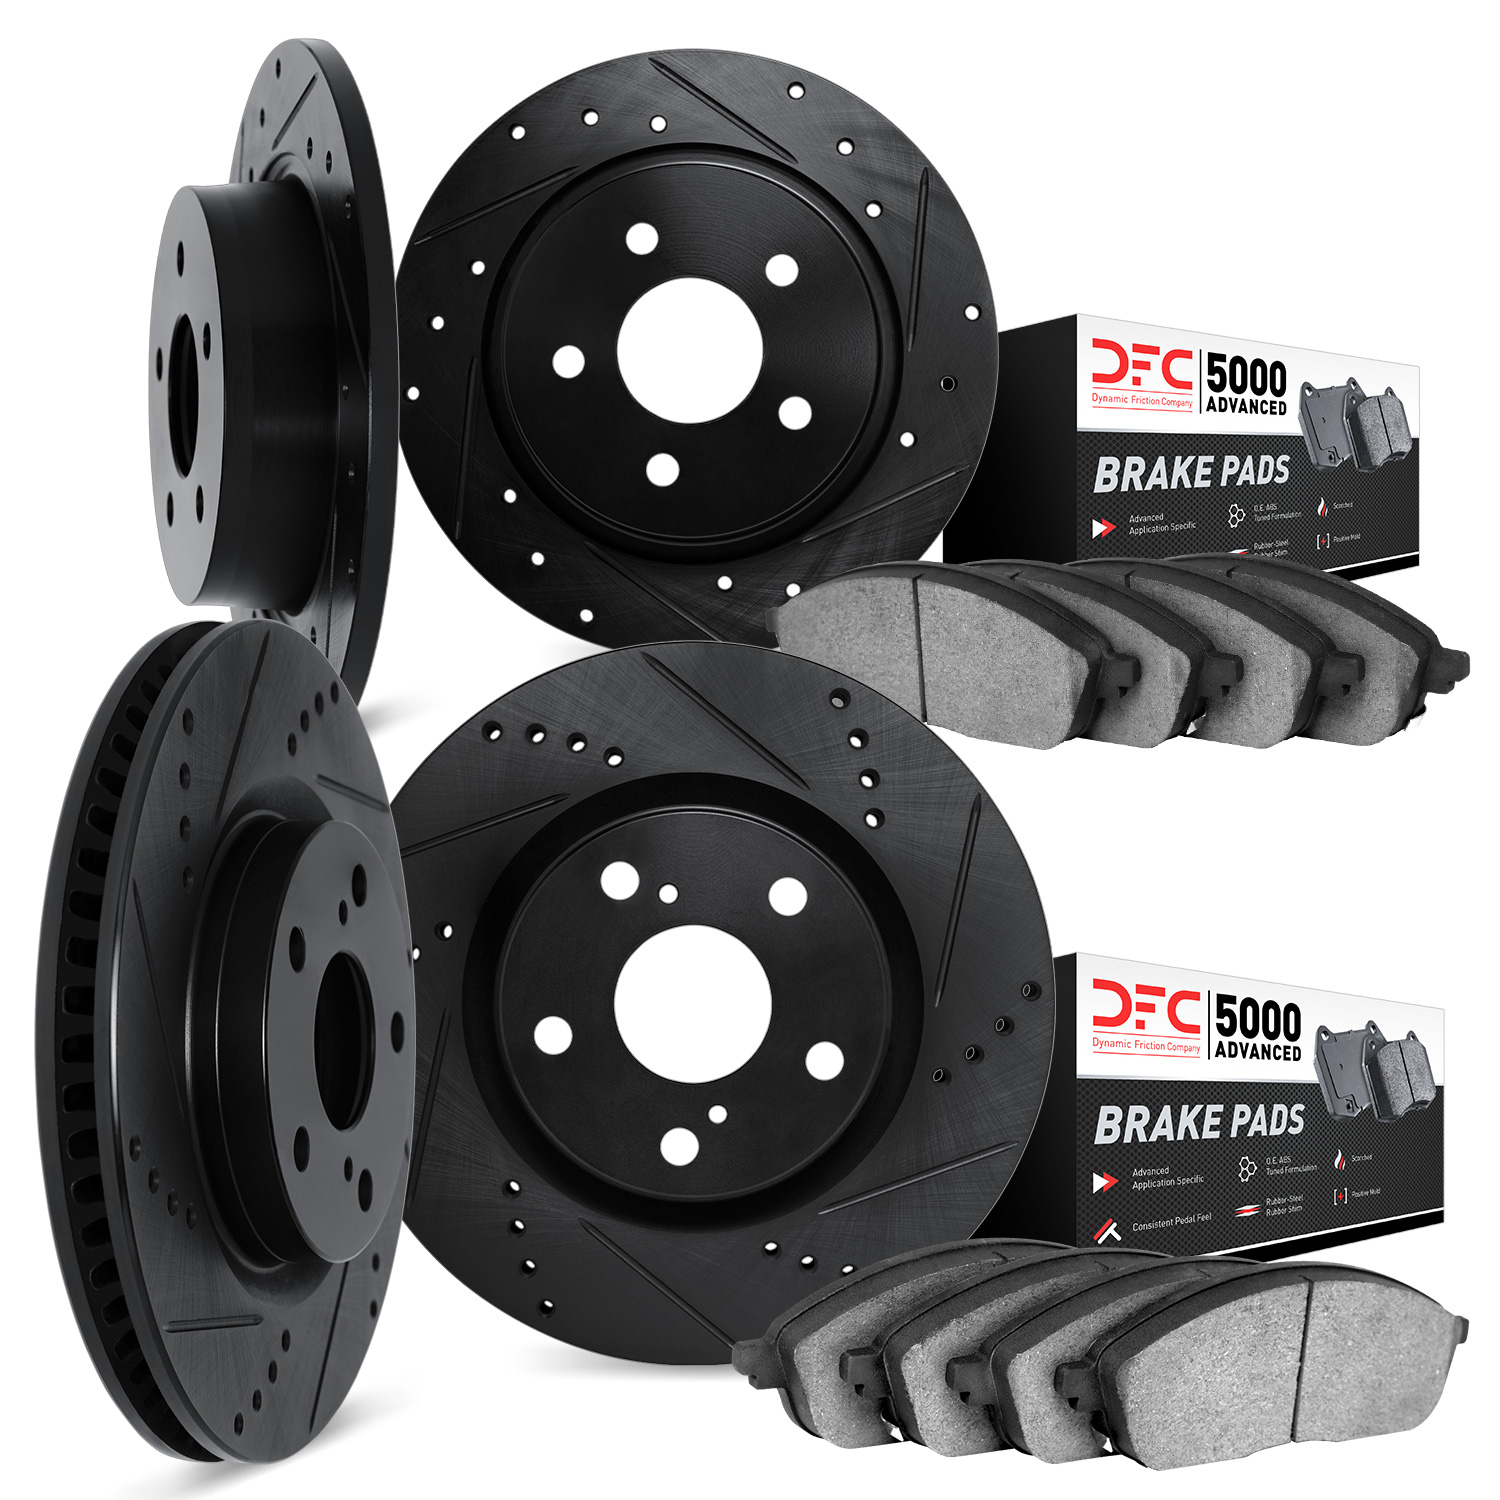 8504-03074 Drilled/Slotted Brake Rotors w/5000 Advanced Brake Pads Kit [Black], Fits Select Kia/Hyundai/Genesis, Position: Front